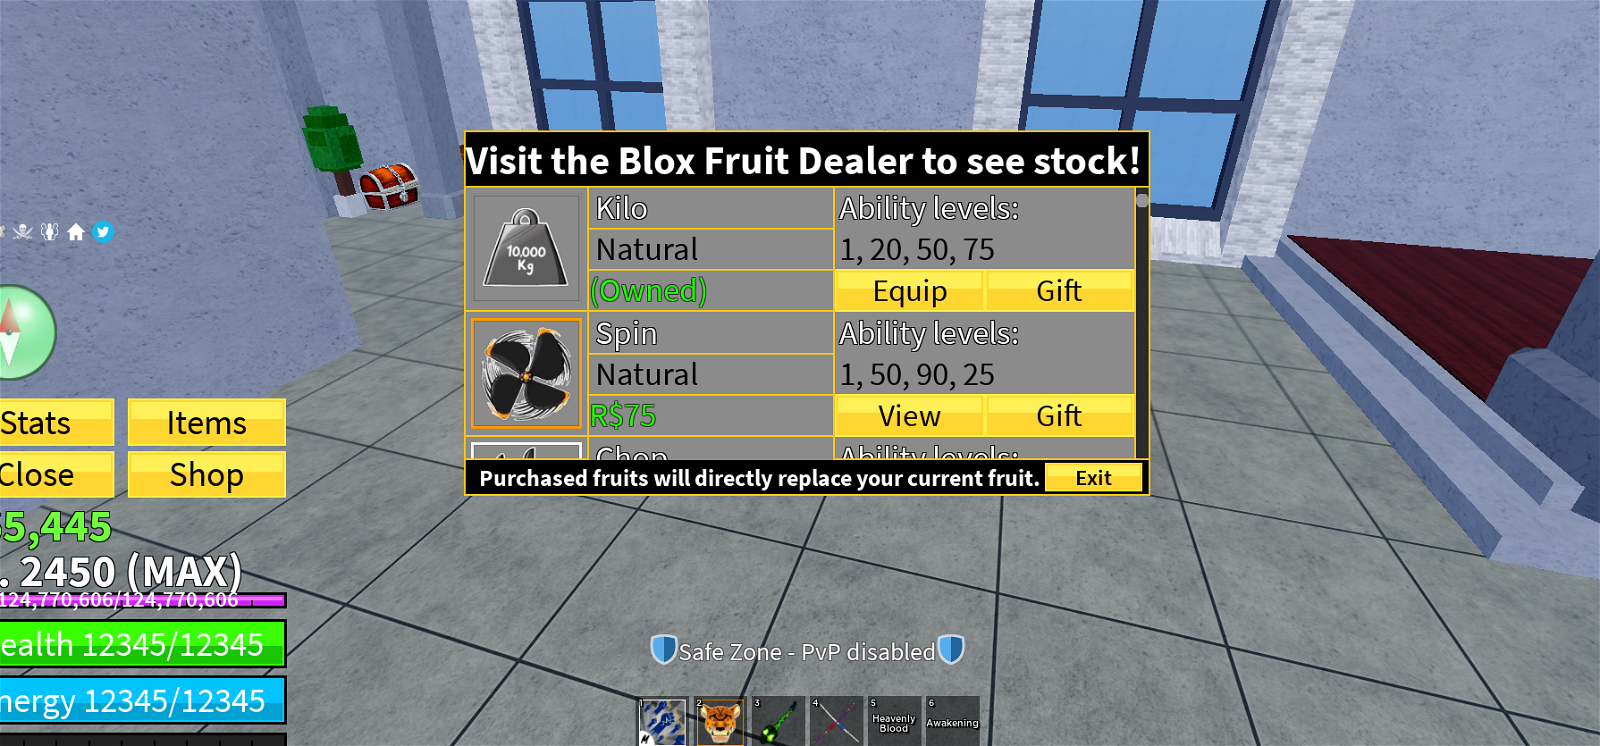 Selling - Blox Fruits Account, Level 2450